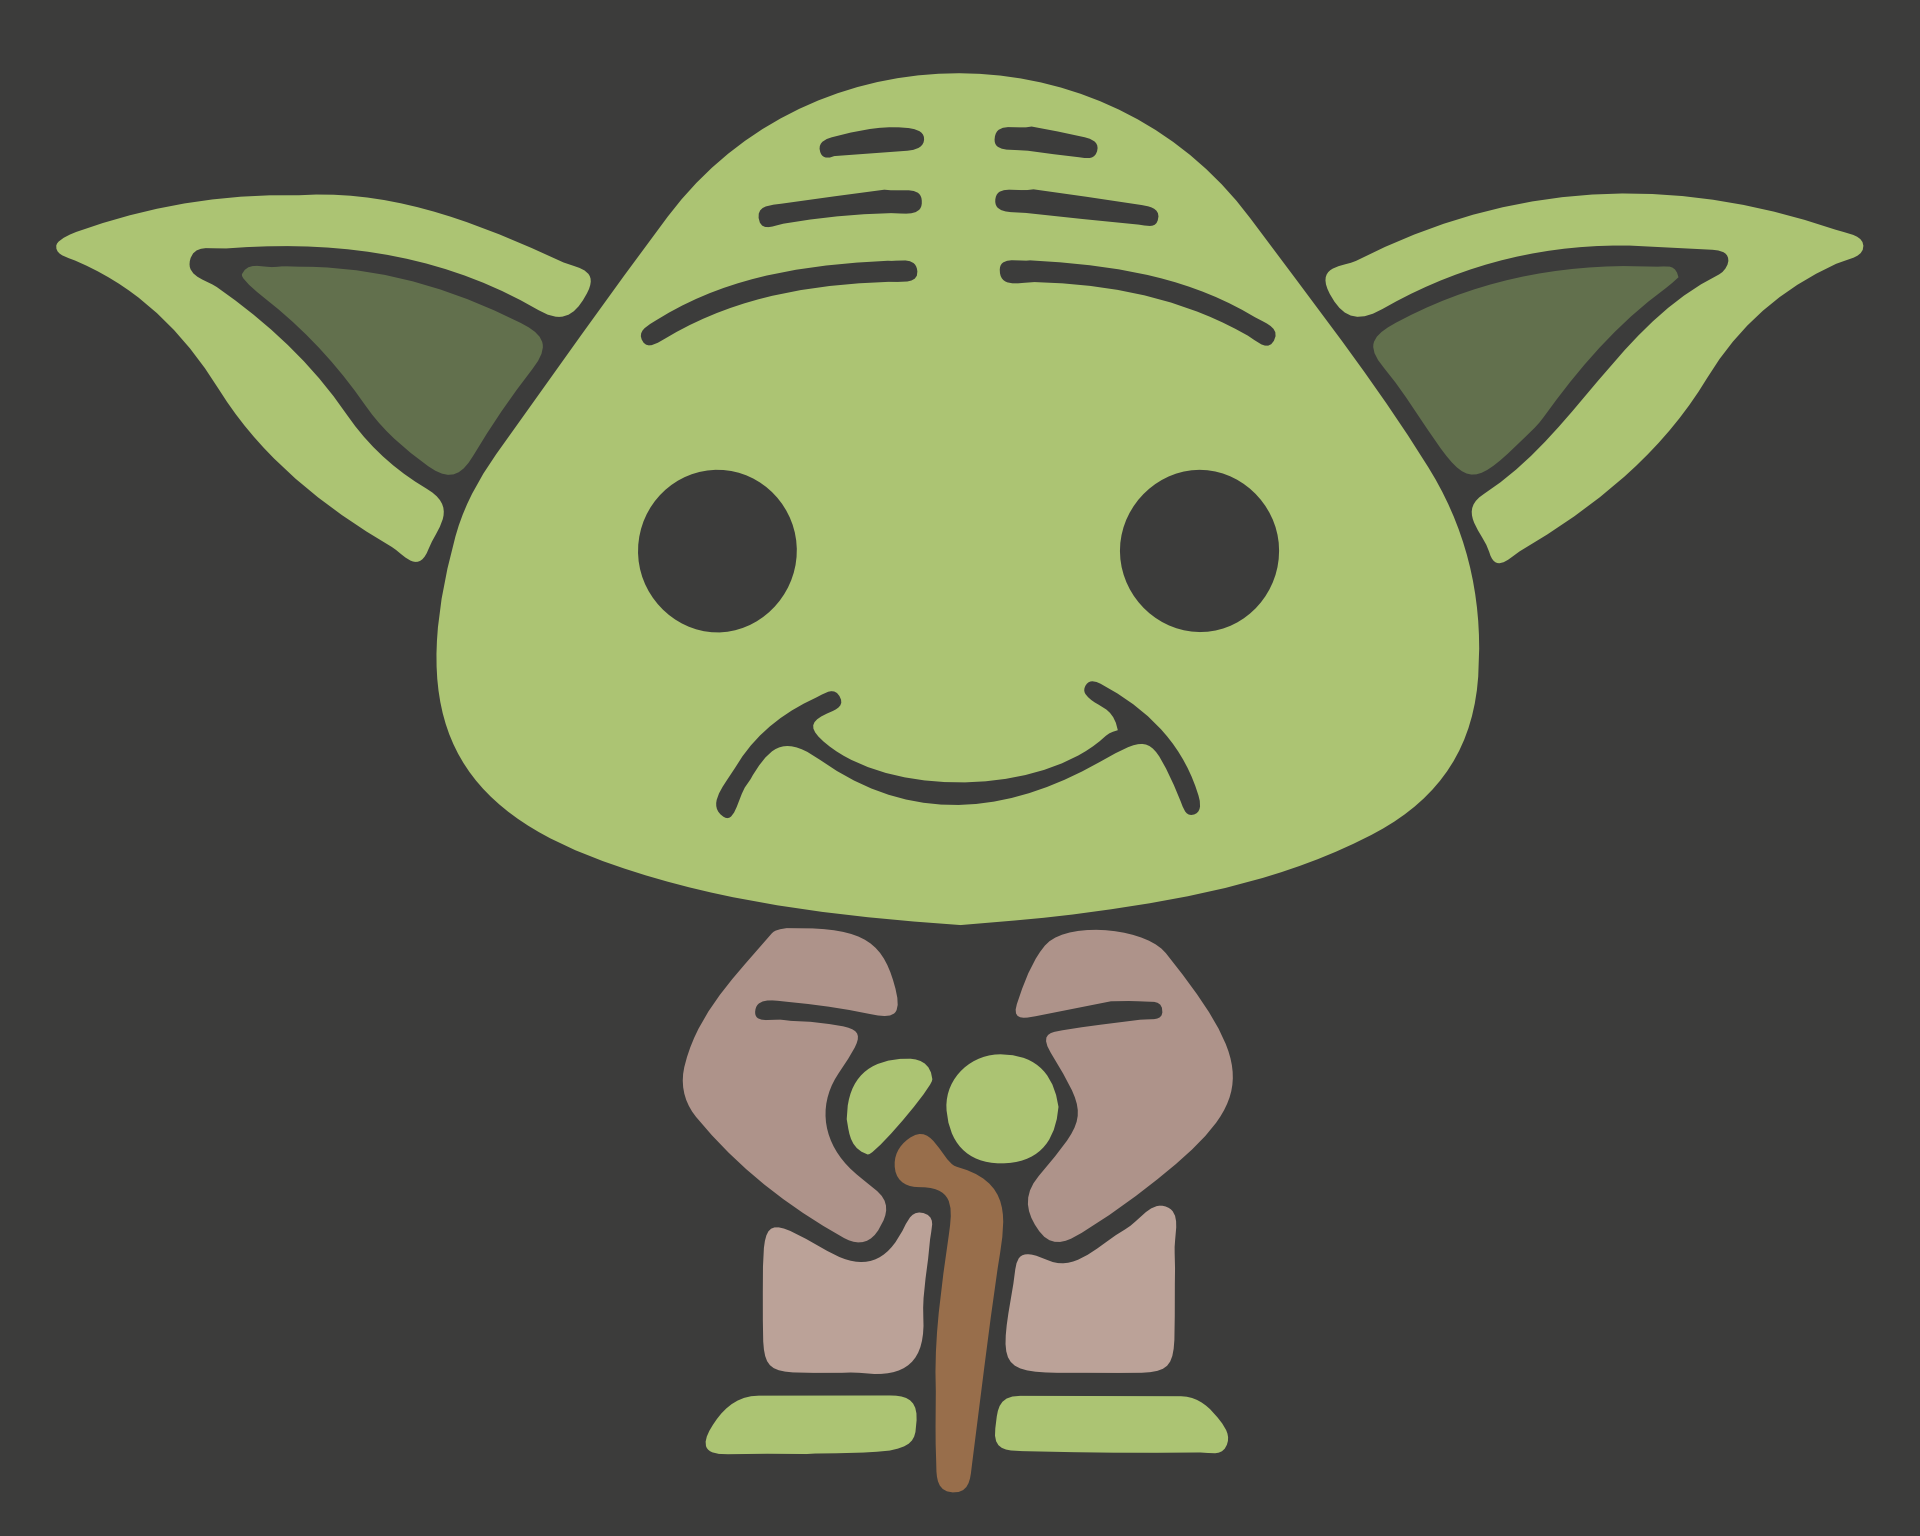 Yoda illustration on a gray background.